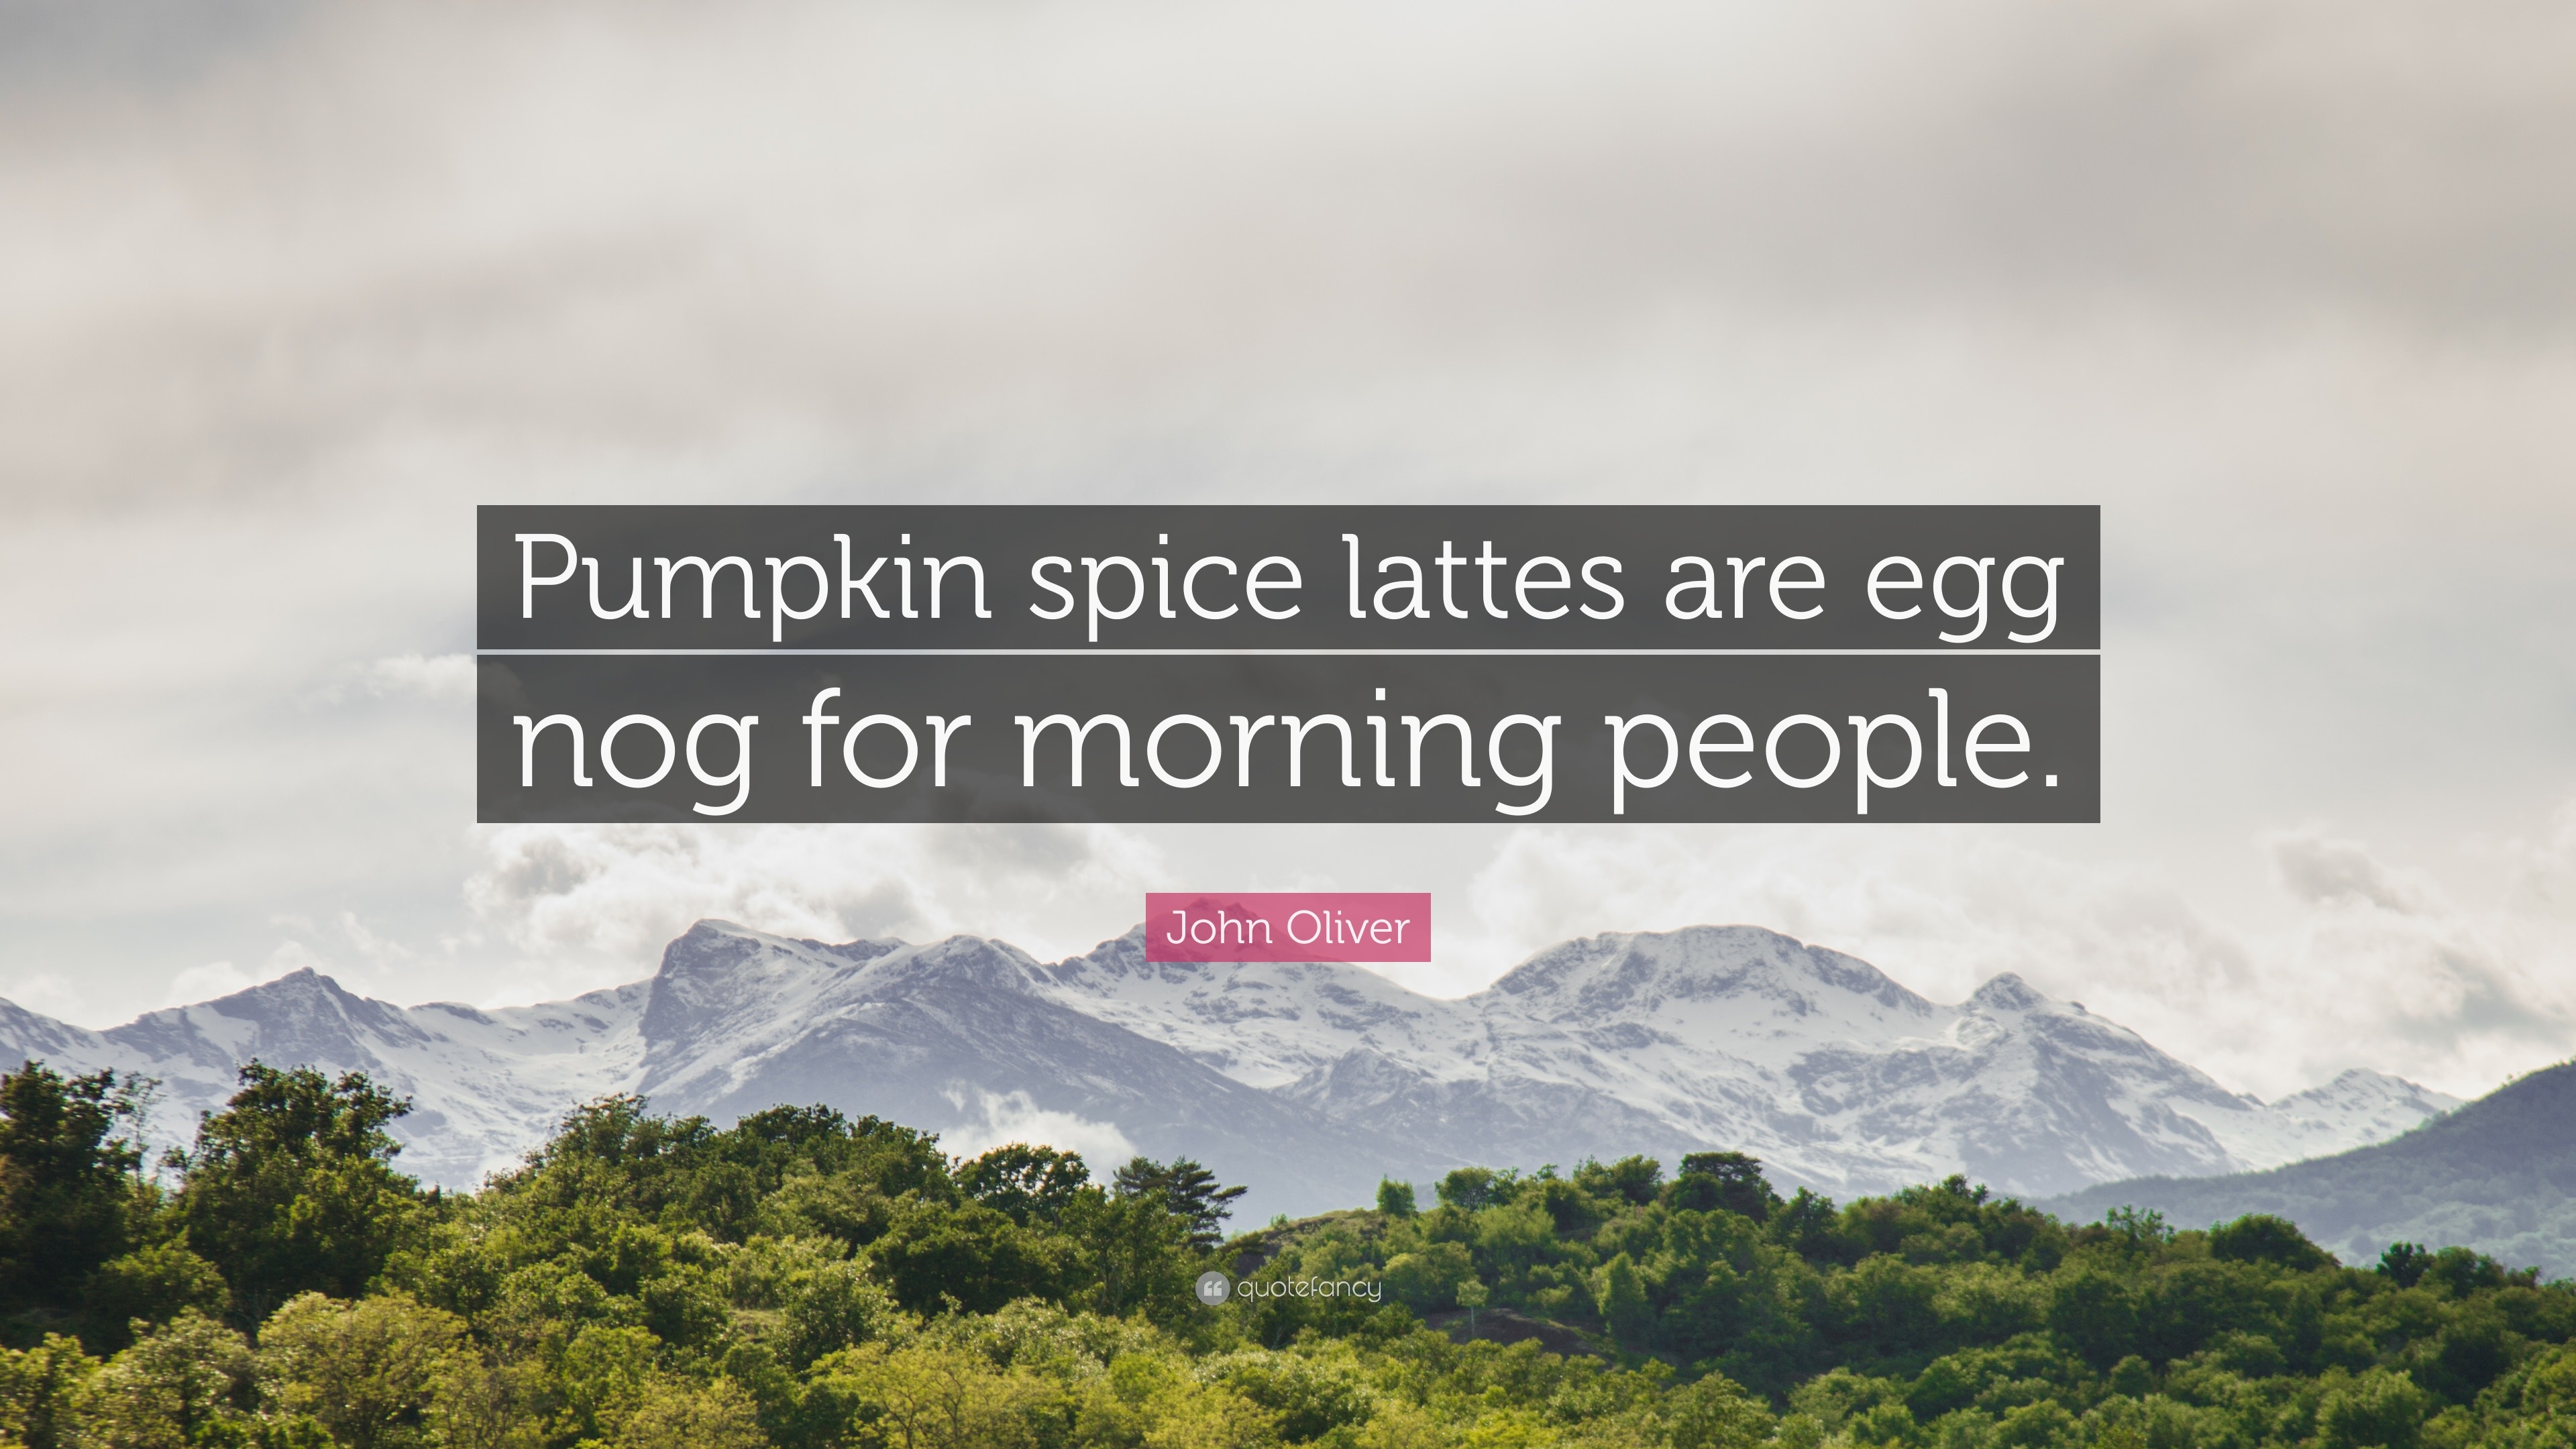 John Oliver Quote “Pumpkin spice lattes are egg nog for morning people.”